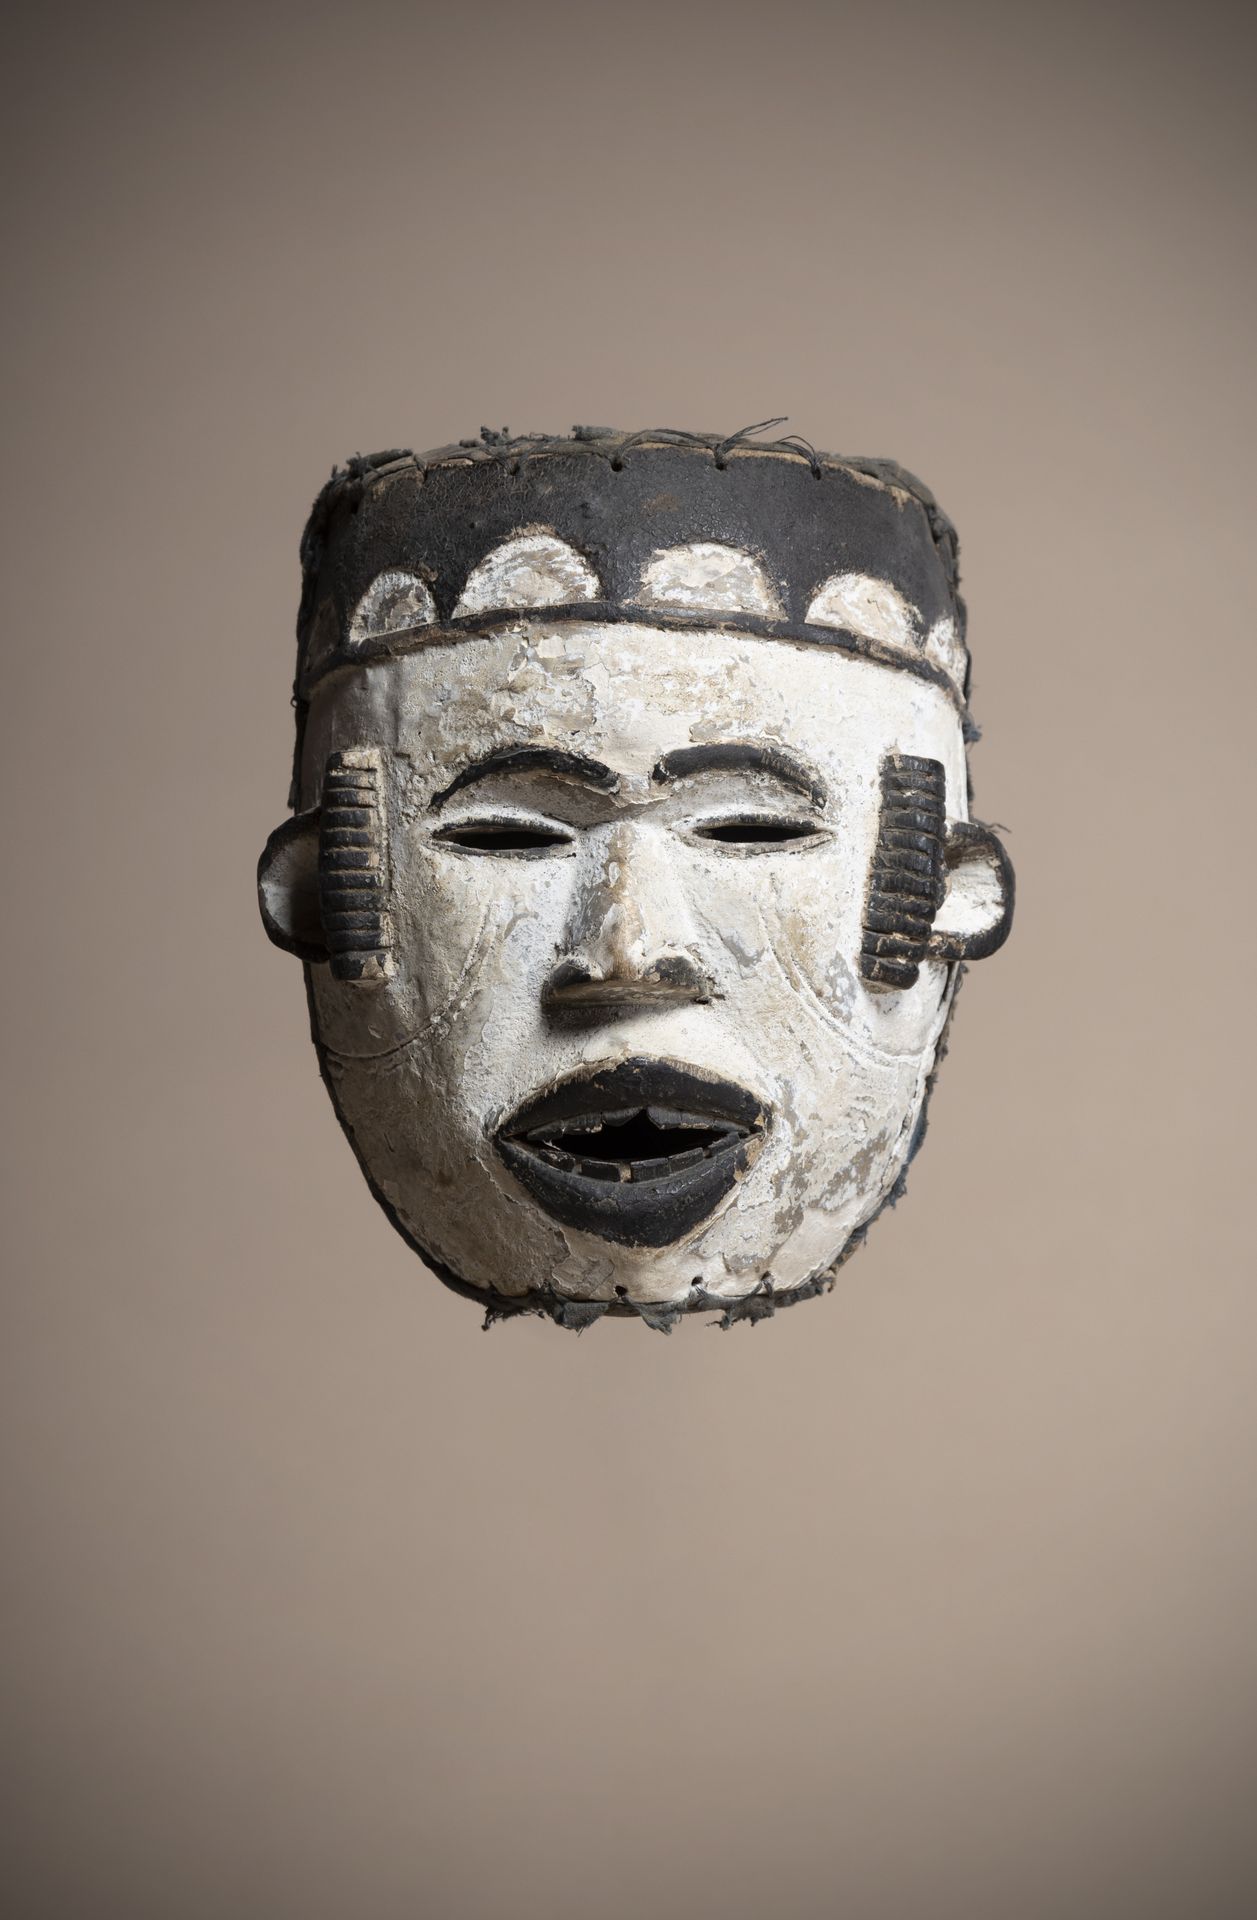 Null IDOMA (Nigéria)

Masque facial blanc avec des scarifications temporales en &hellip;